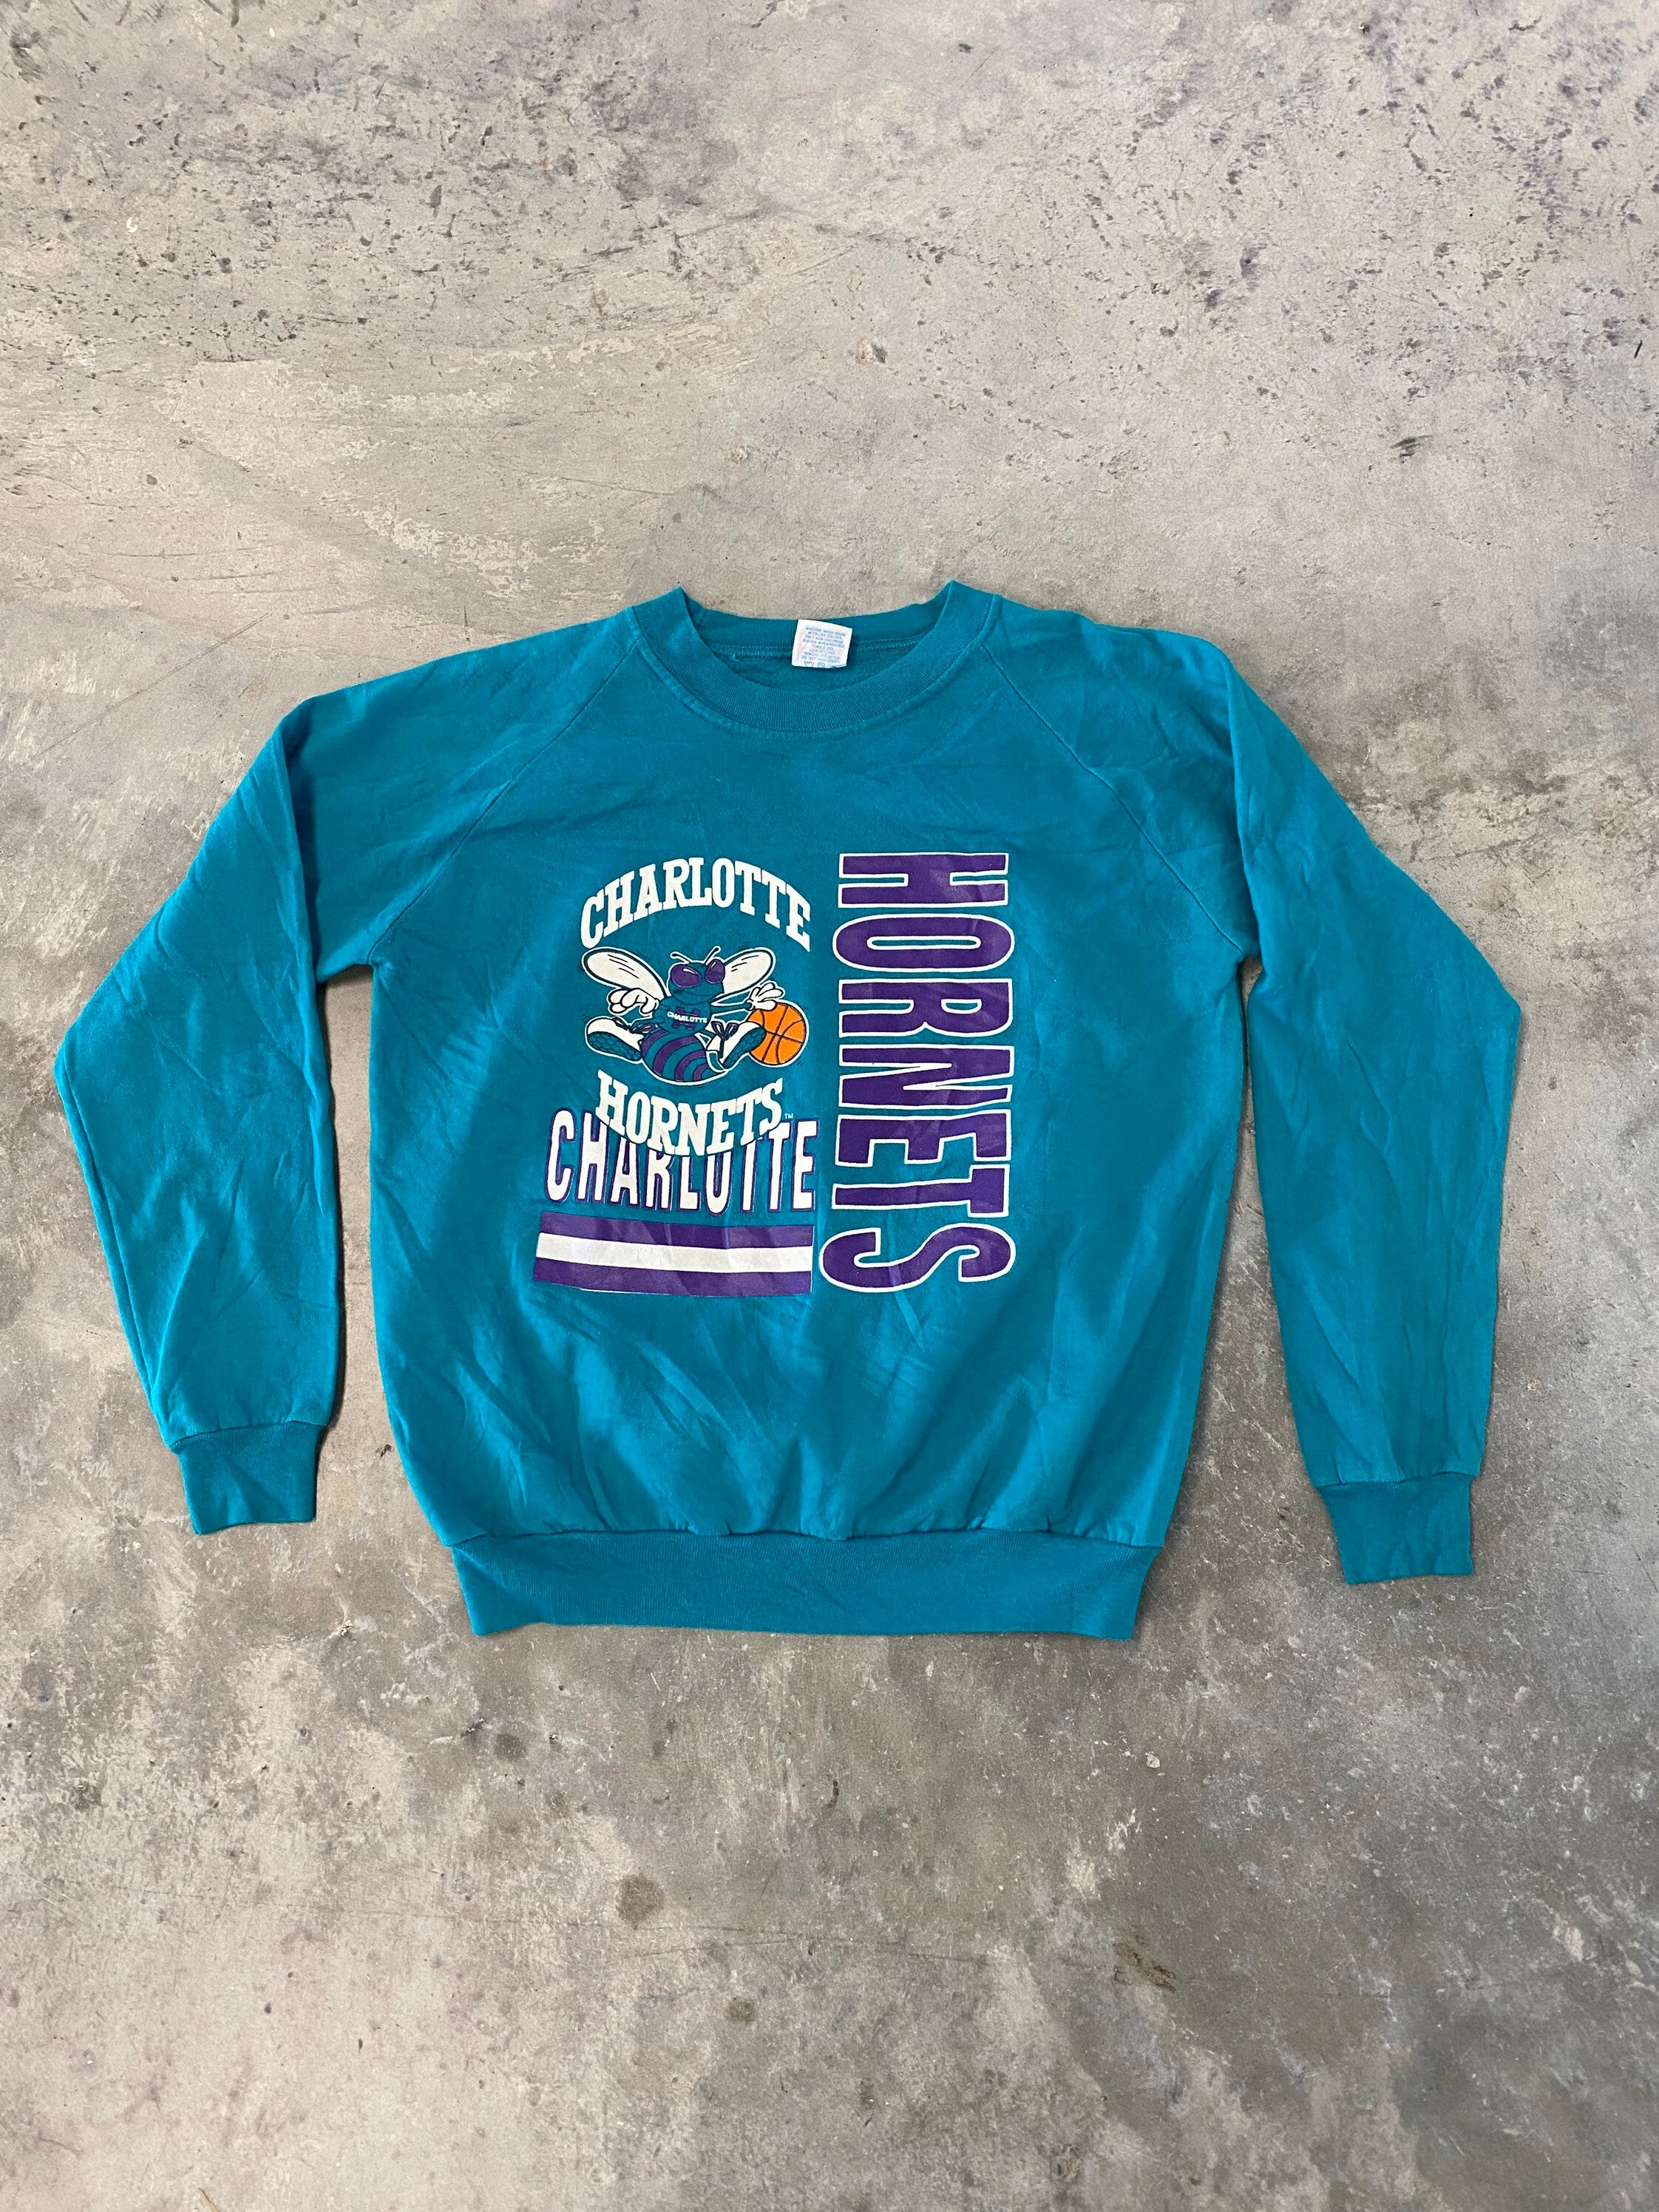 90s Charlotte Hornets Sweatshirt - Men's Medium, Women's Large